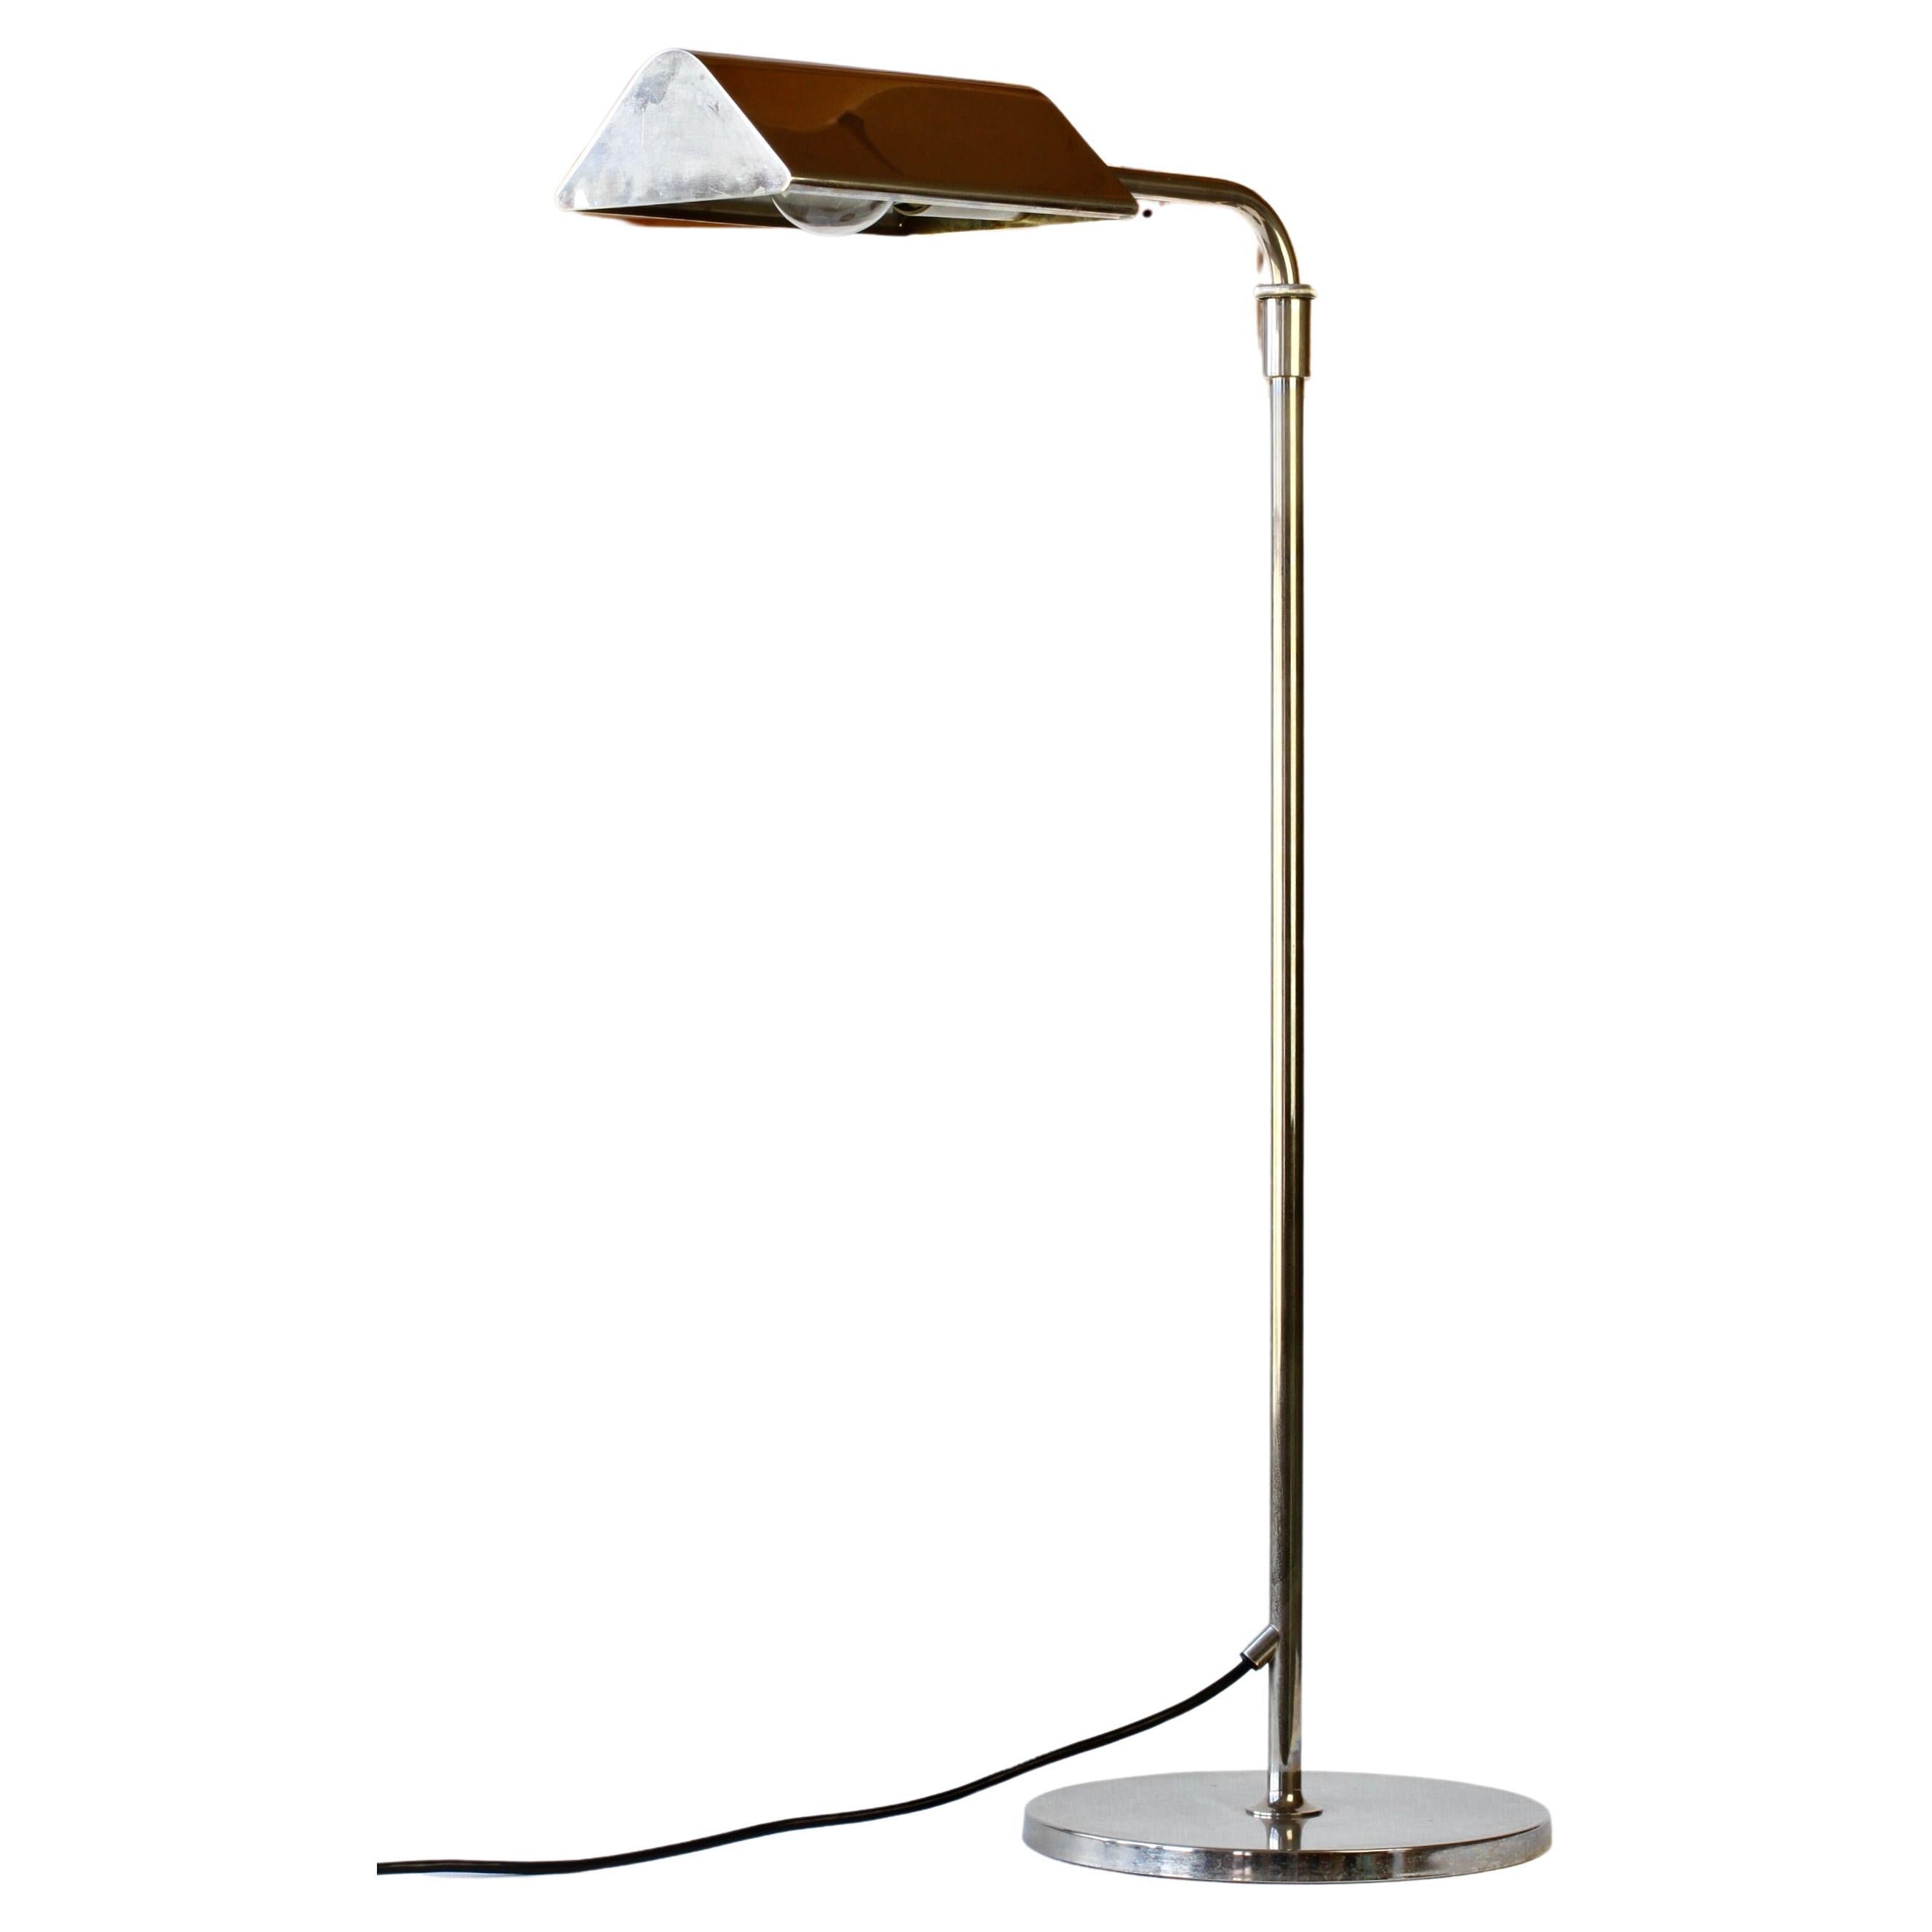 Florian Schulz Mid-Century Vintage Modernist Nickel Adjustable Floor Lamp Light For Sale